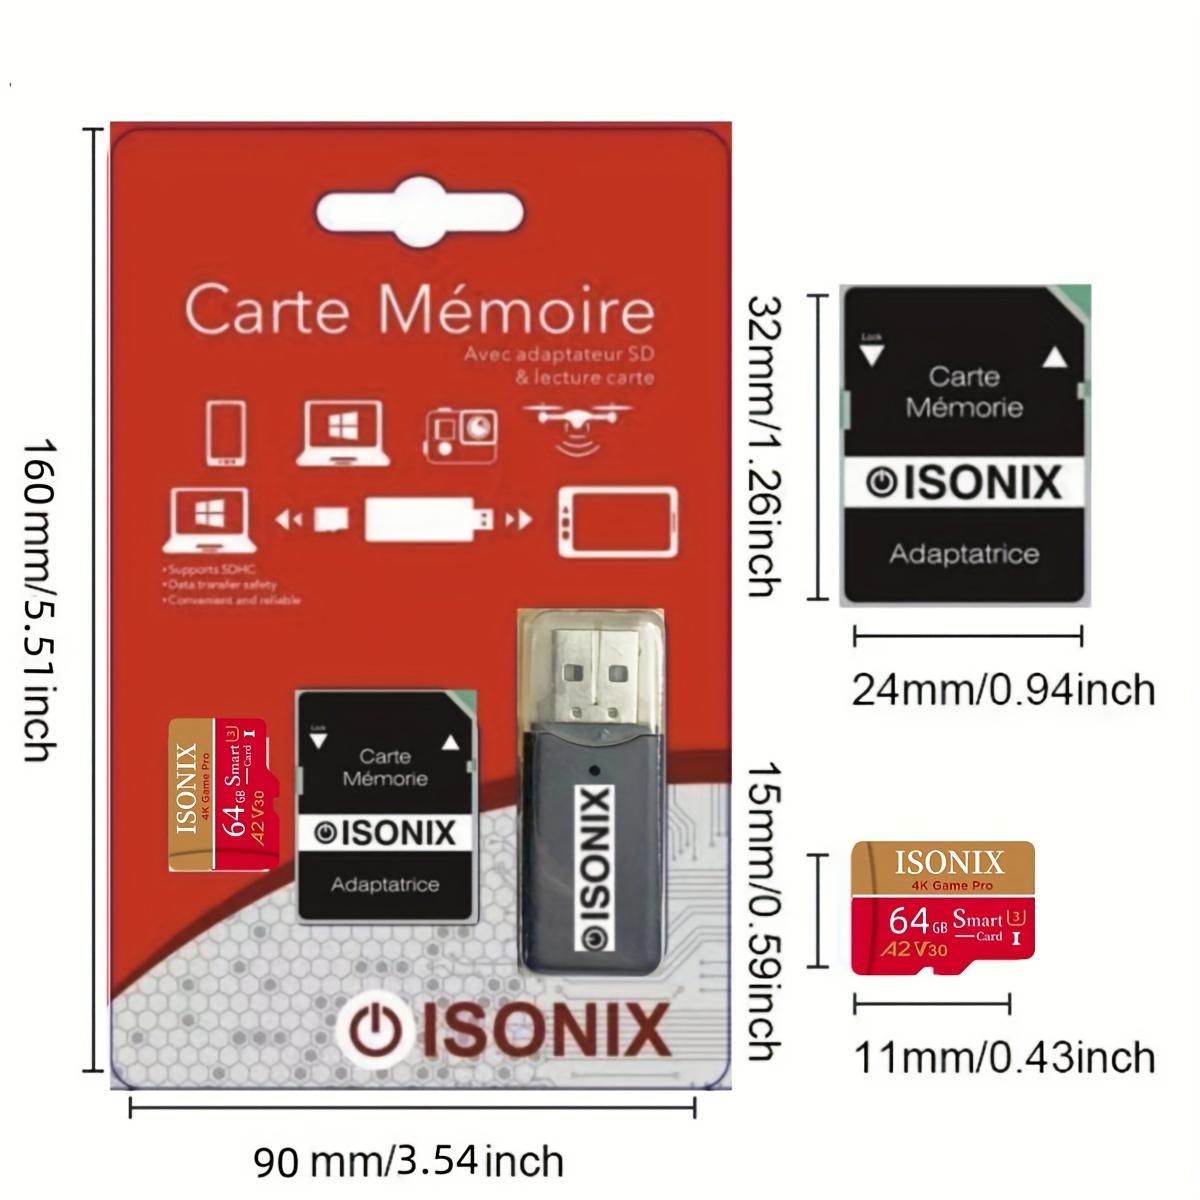 V30 A2 U3 High speed Class 10 SD Card 32GB 64GB 128GB 256GB carte sd Memory  Card Flash usb stick sdcards For Phone/PC/Camera